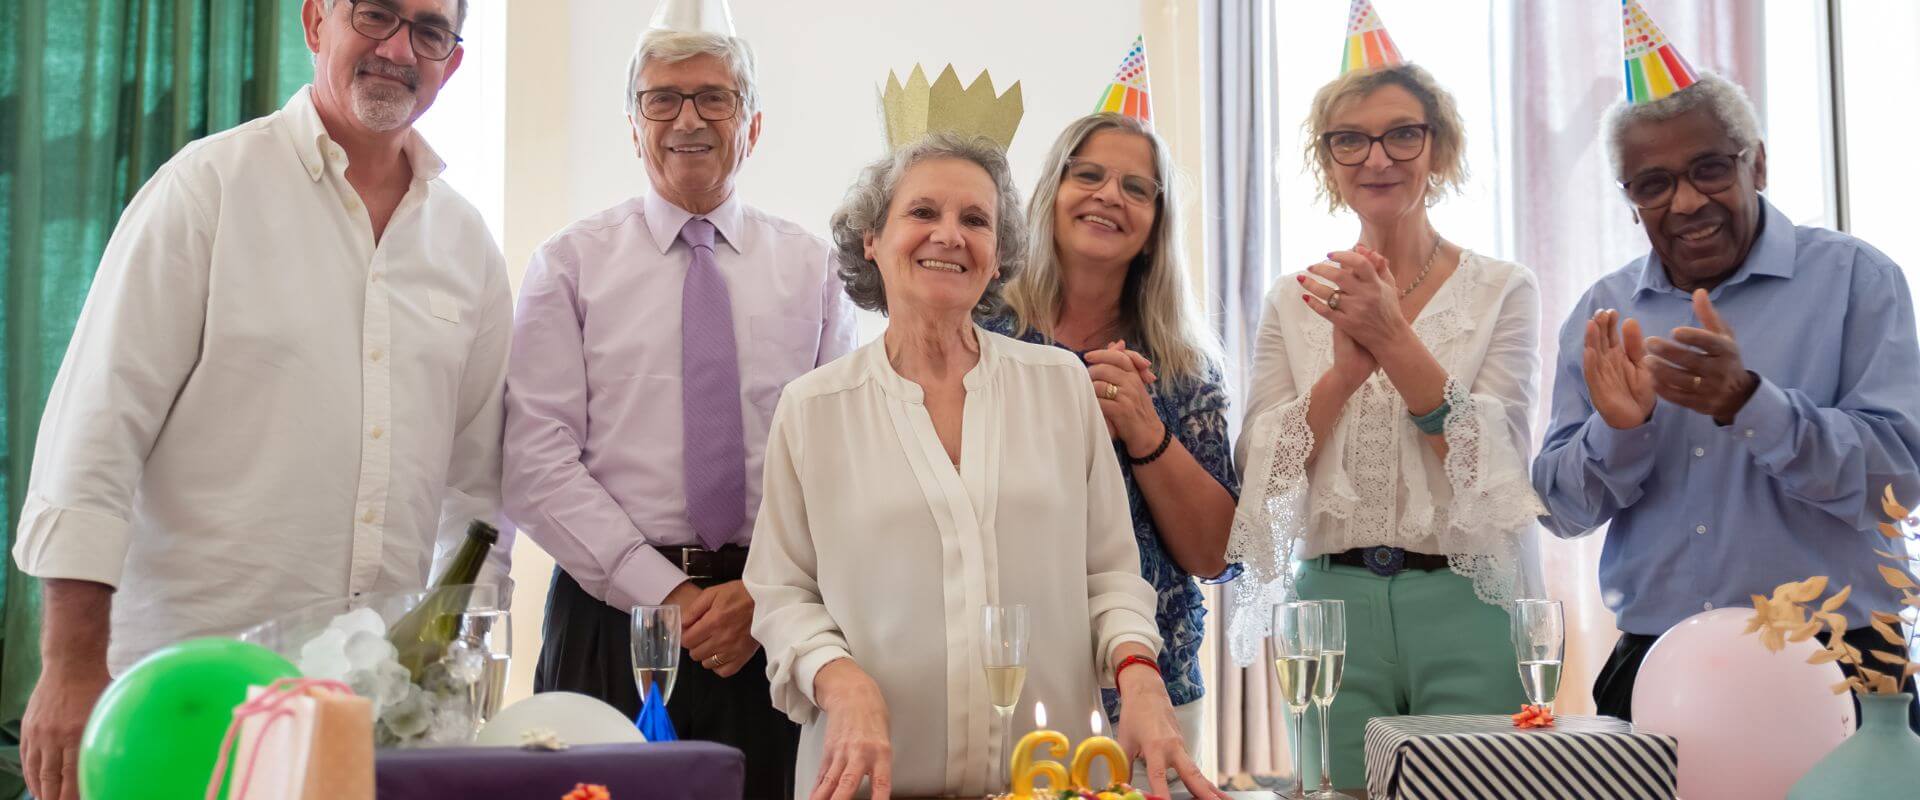 Happy senior group celebrating Medicare Giveback benefit